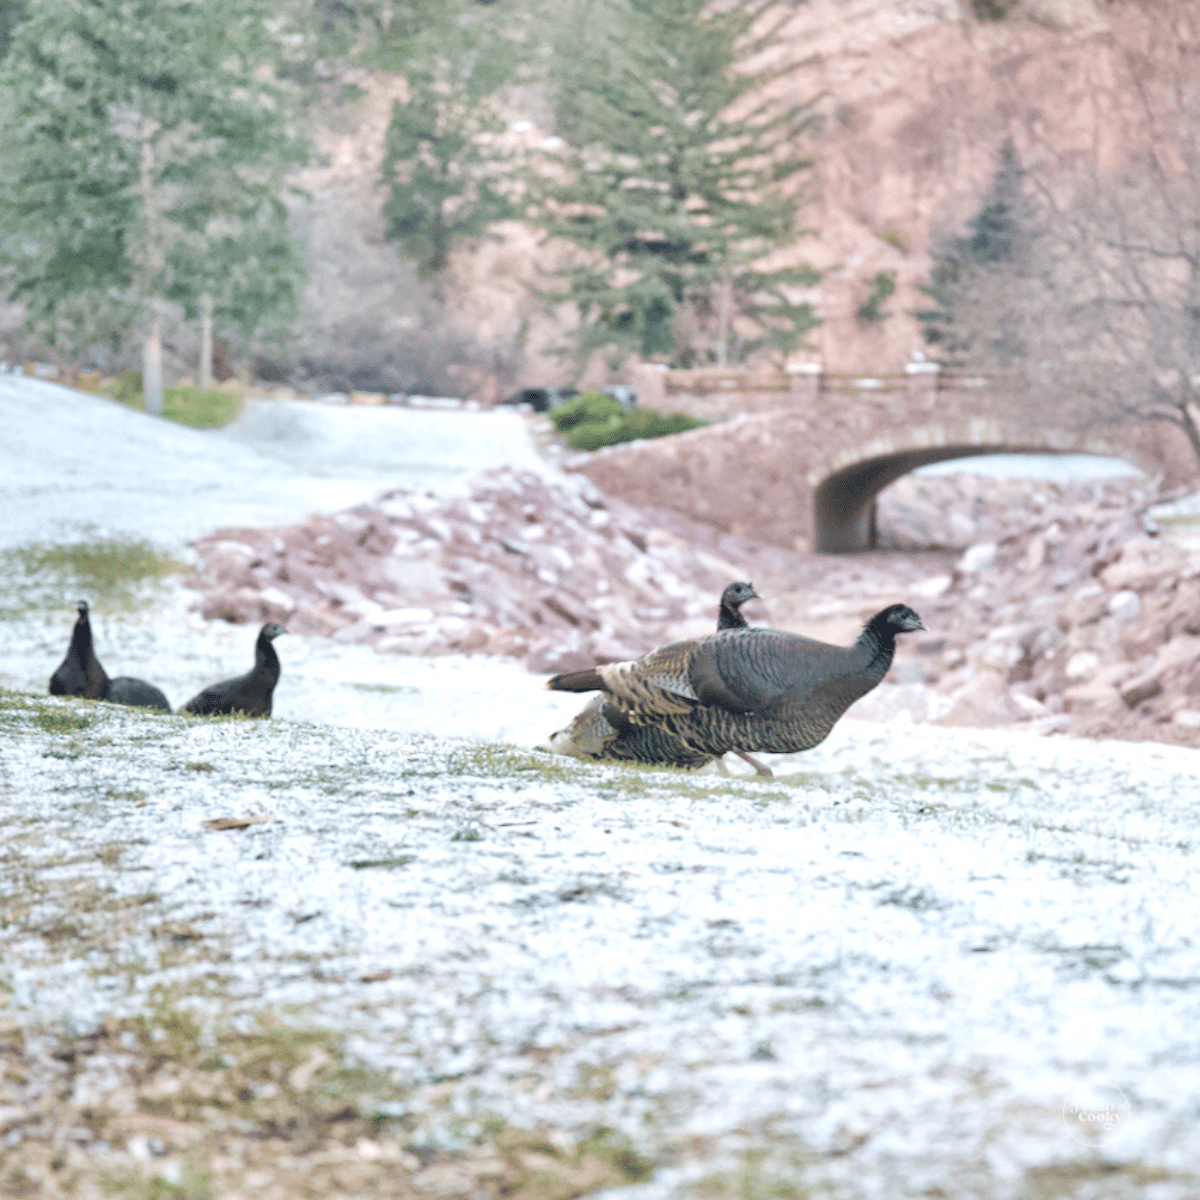 Wild Turkeys roaming the grounds at Glen Eyrie.